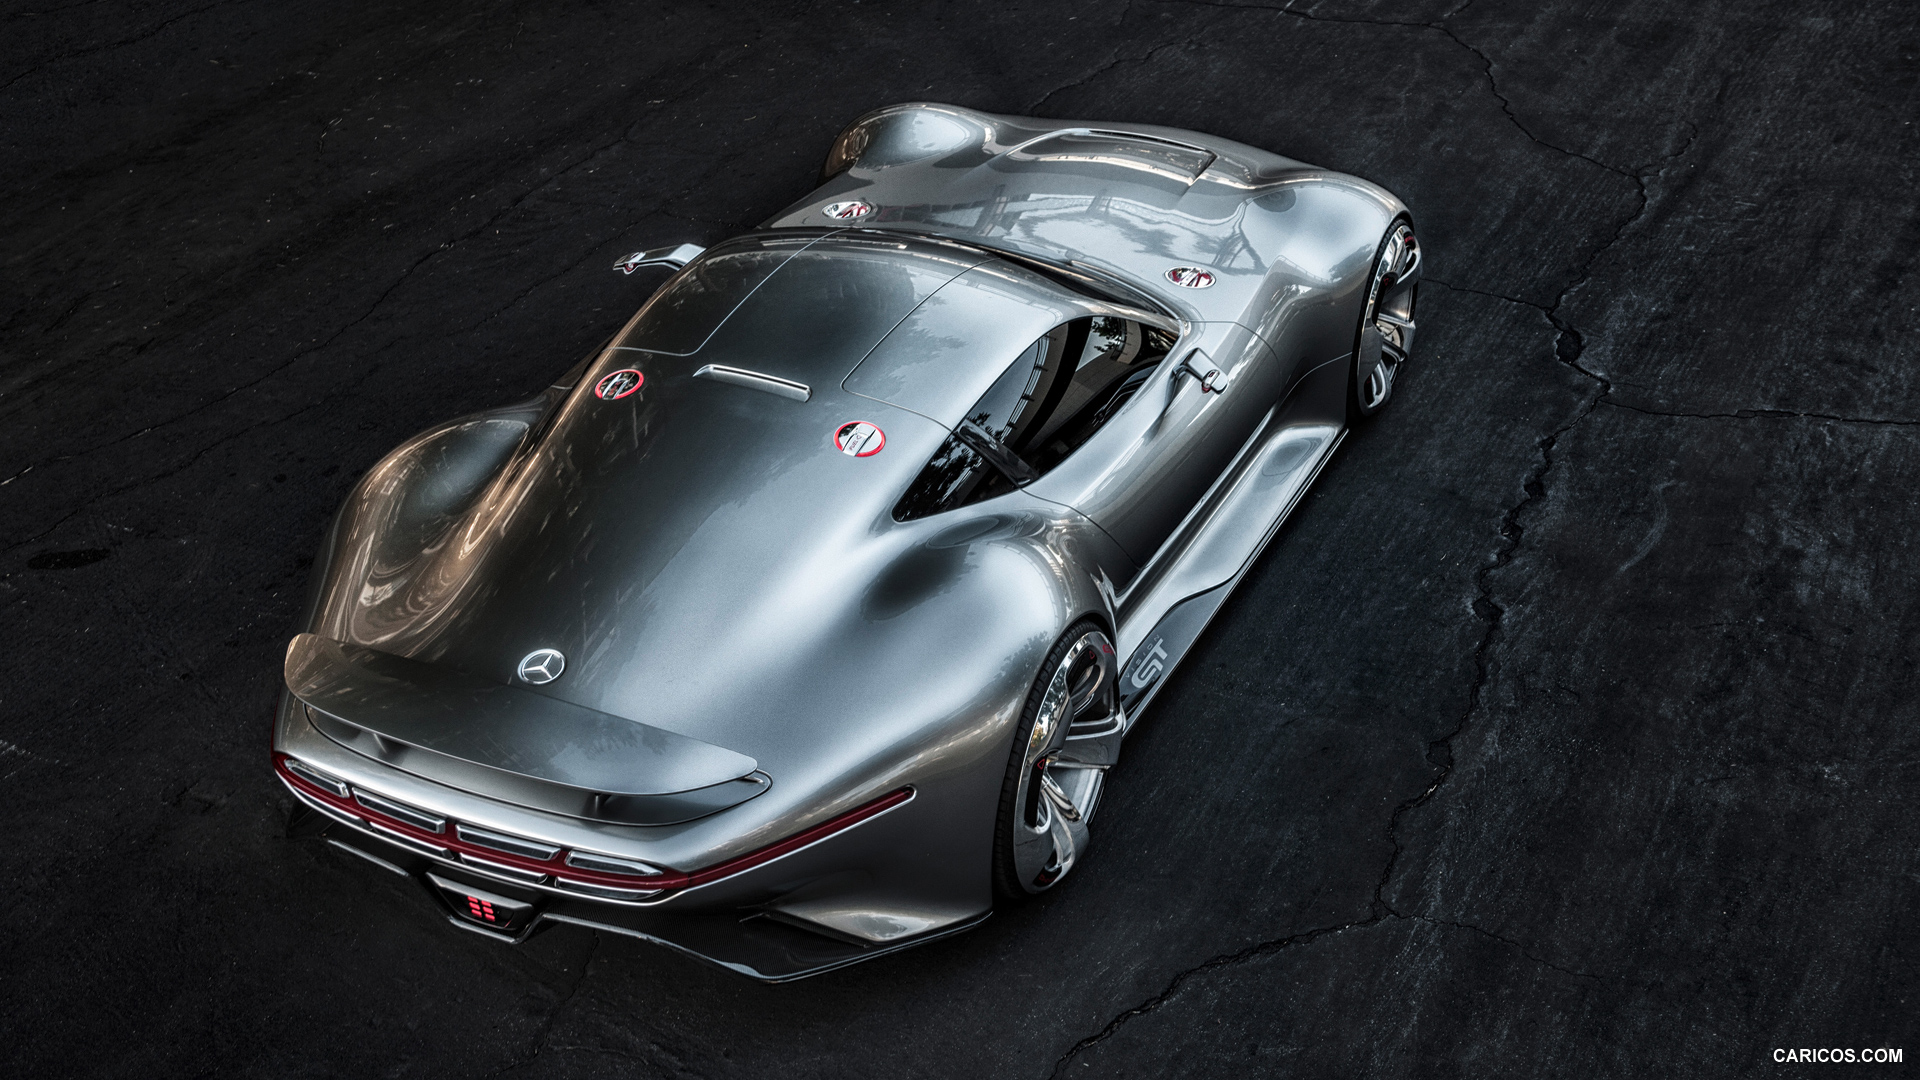 Mercedes-Benz AMG Vision Gran Turismo Concept (2013)  - Top, #10 of 25